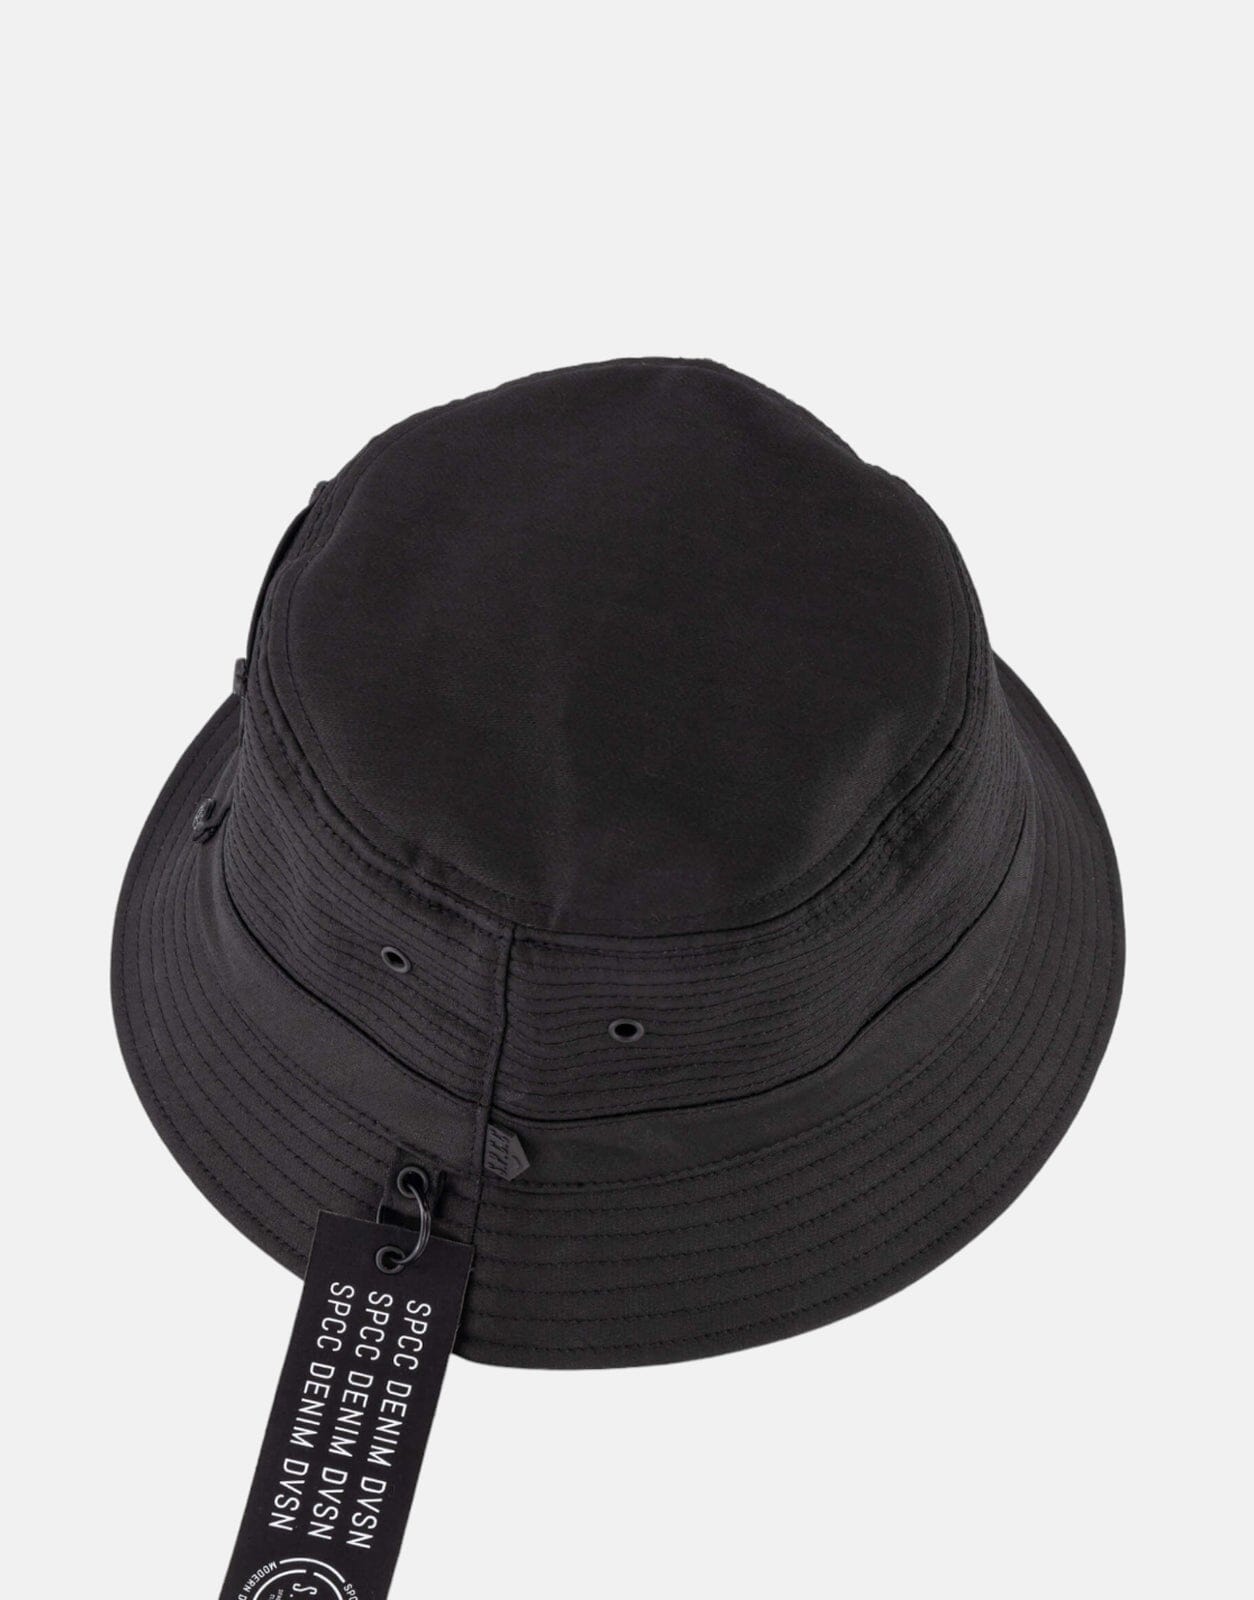 SPCC Falco Black Bucket Hat - Subwear